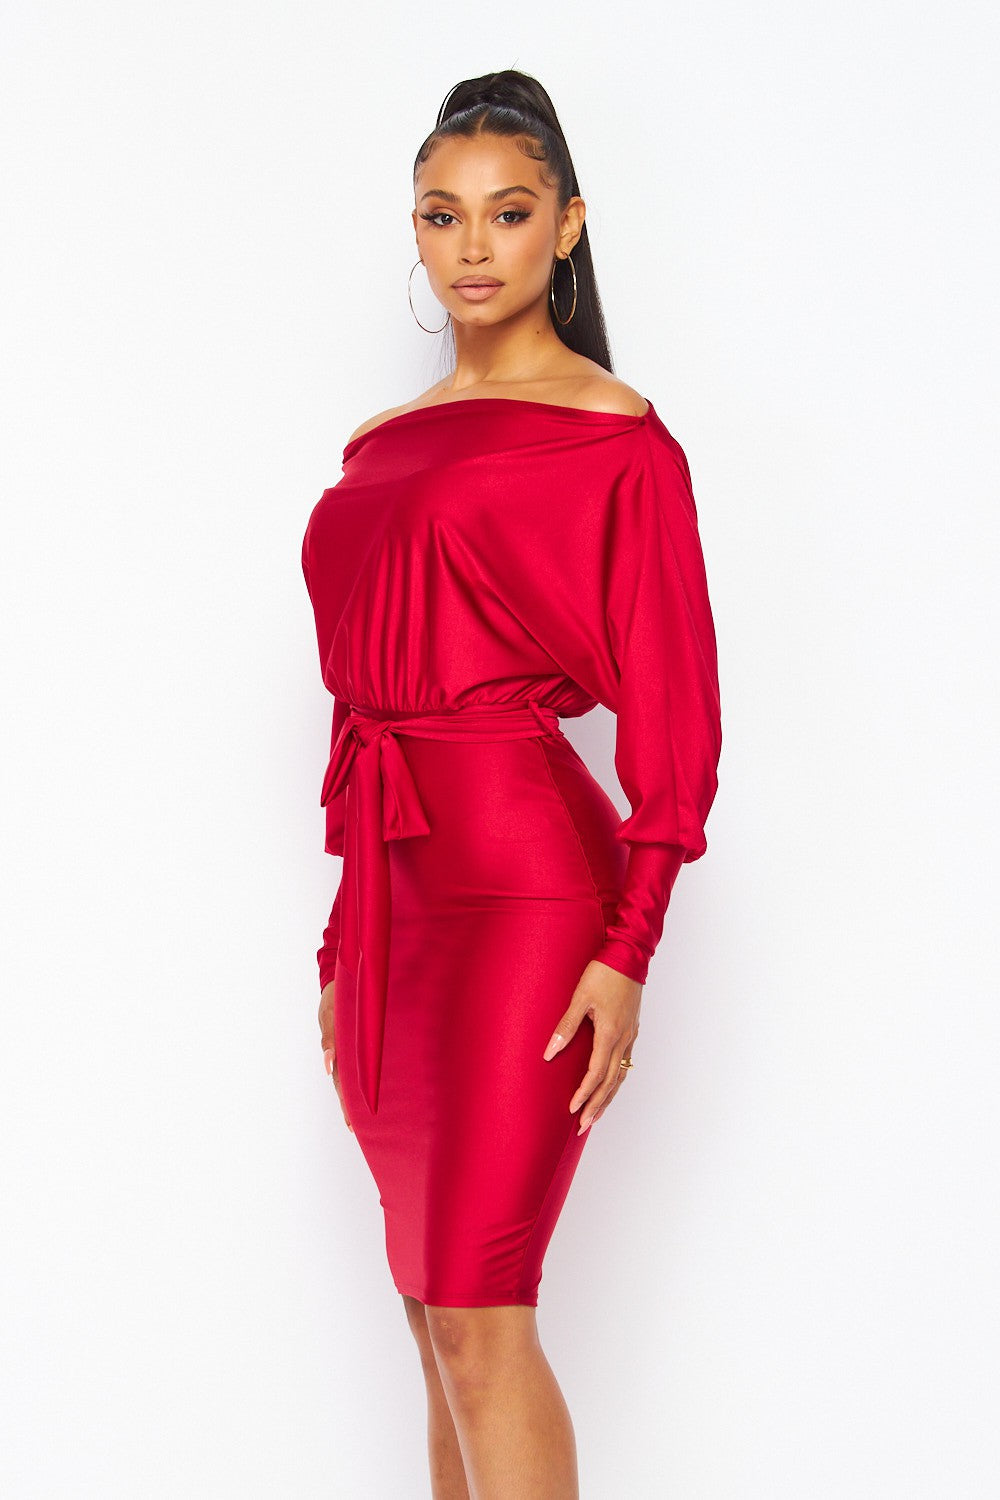 Women's red off the shoulder dress